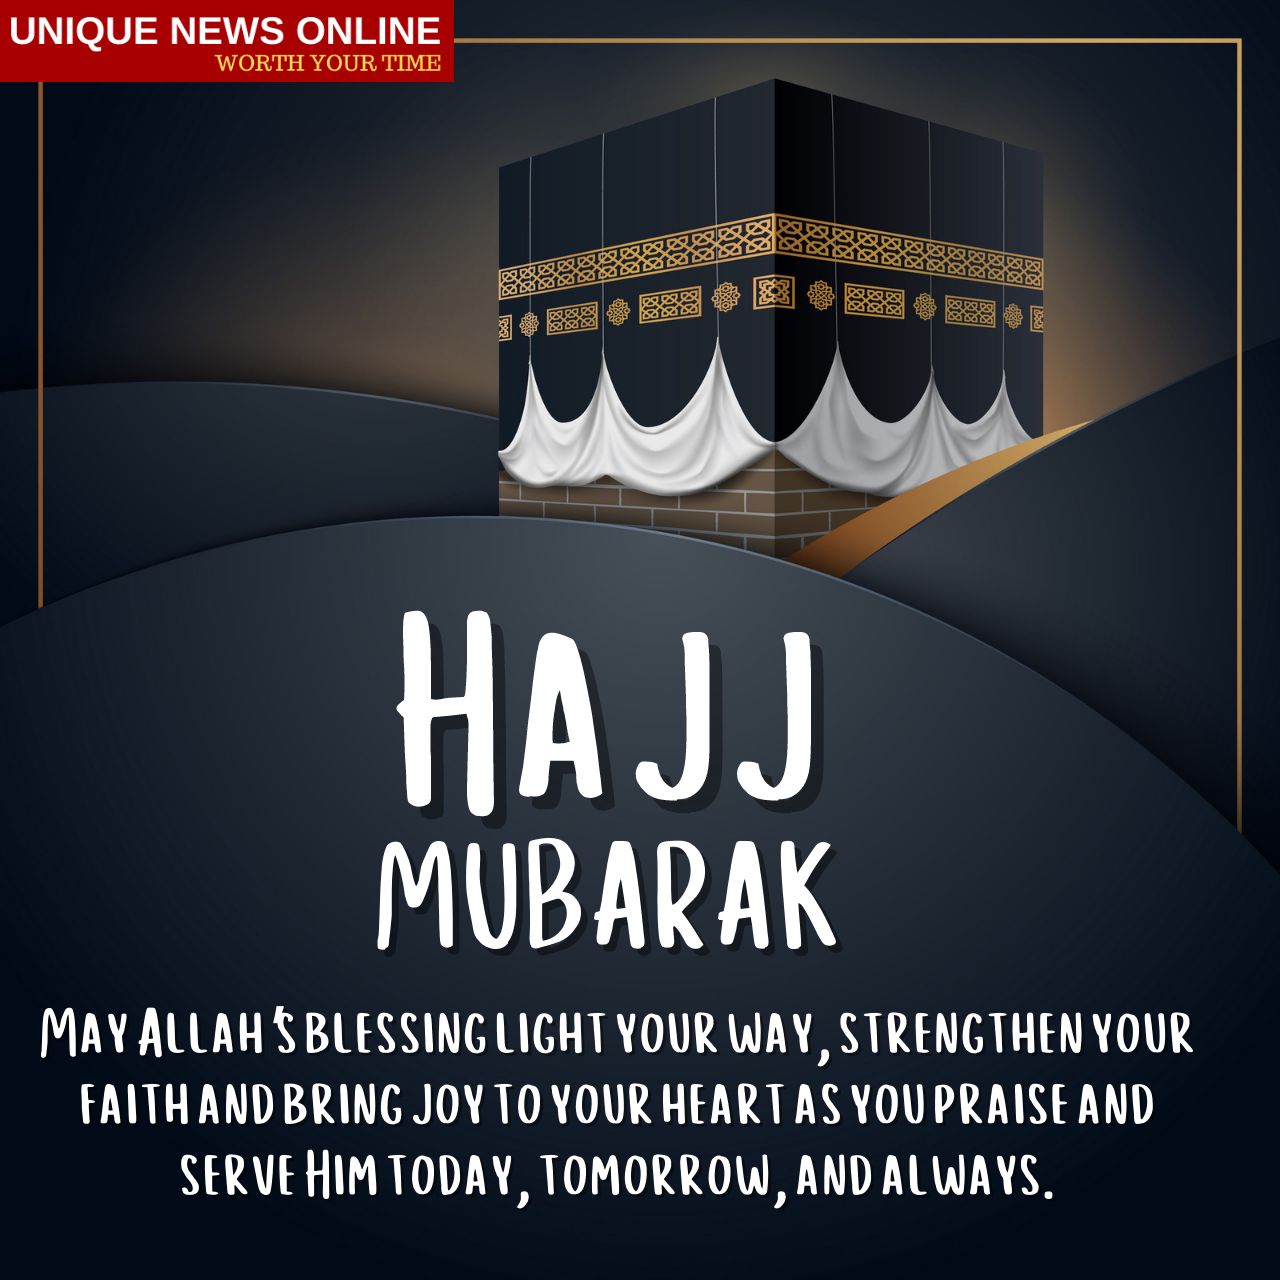 Hajj Mubarak 2021 Quotes, Wishes, Images, Dua, PNG, Greeting